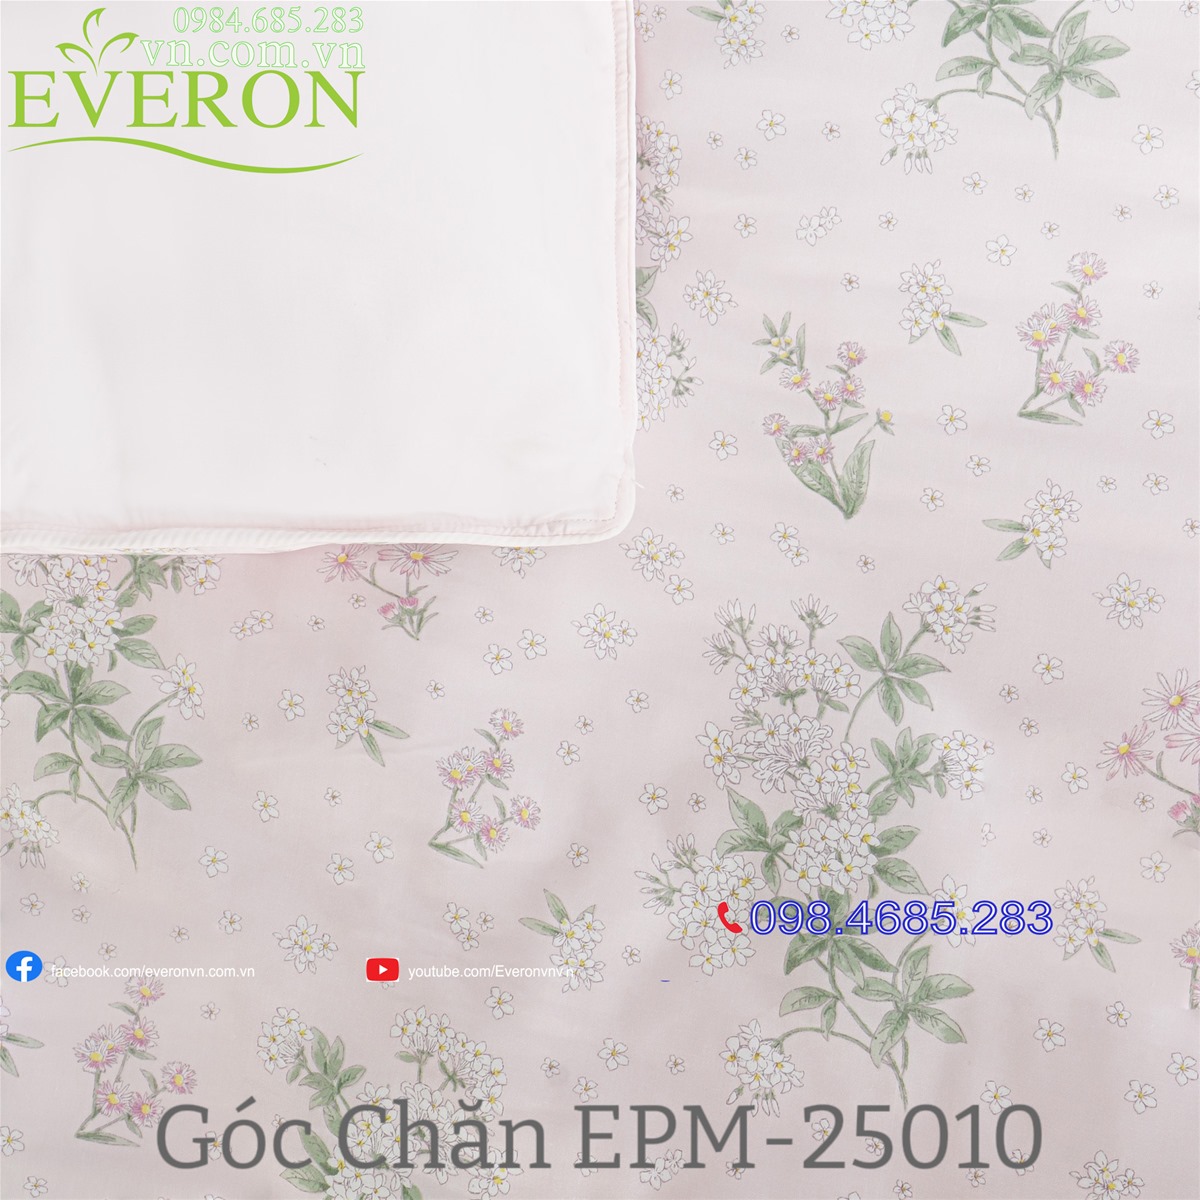 vỏ chăn Everon EPM-25010